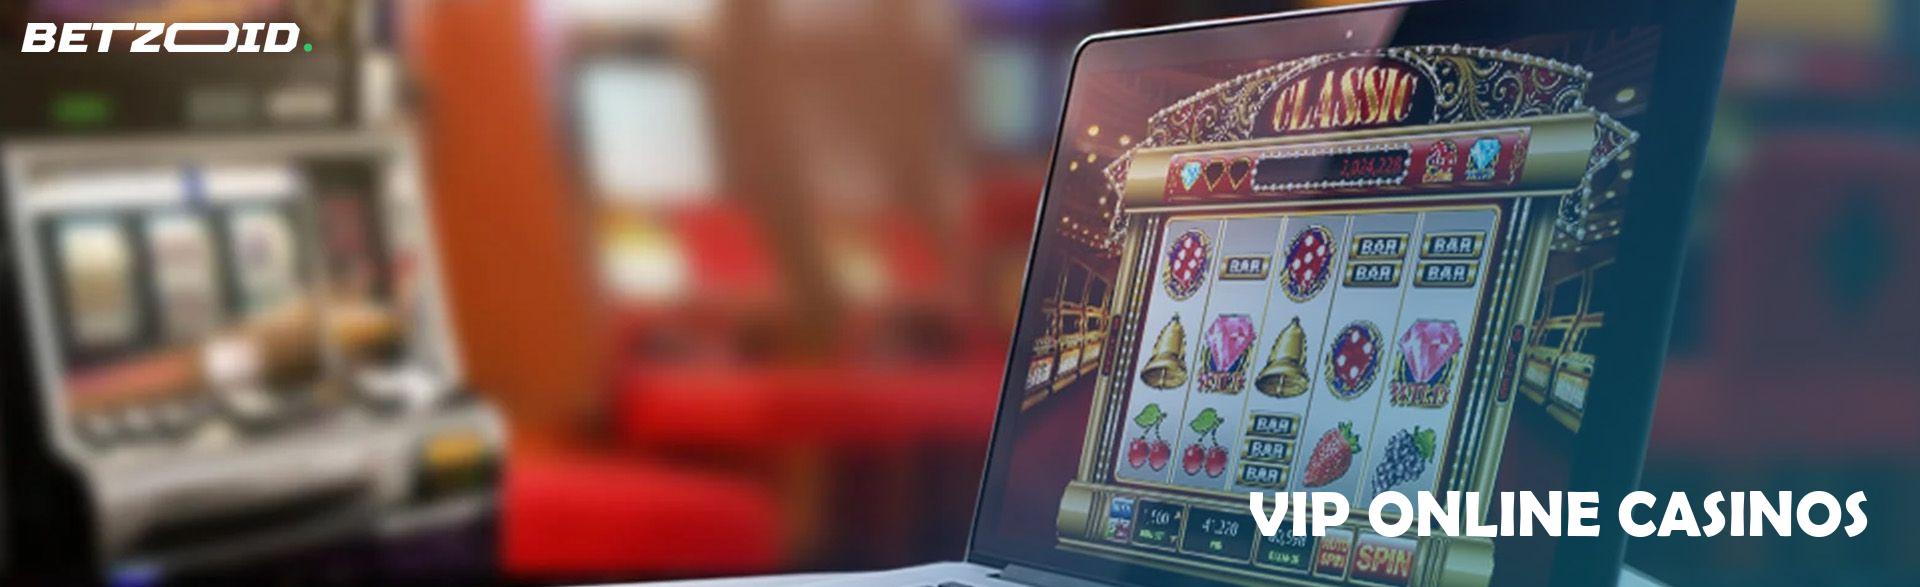 VIP Online Casinos.